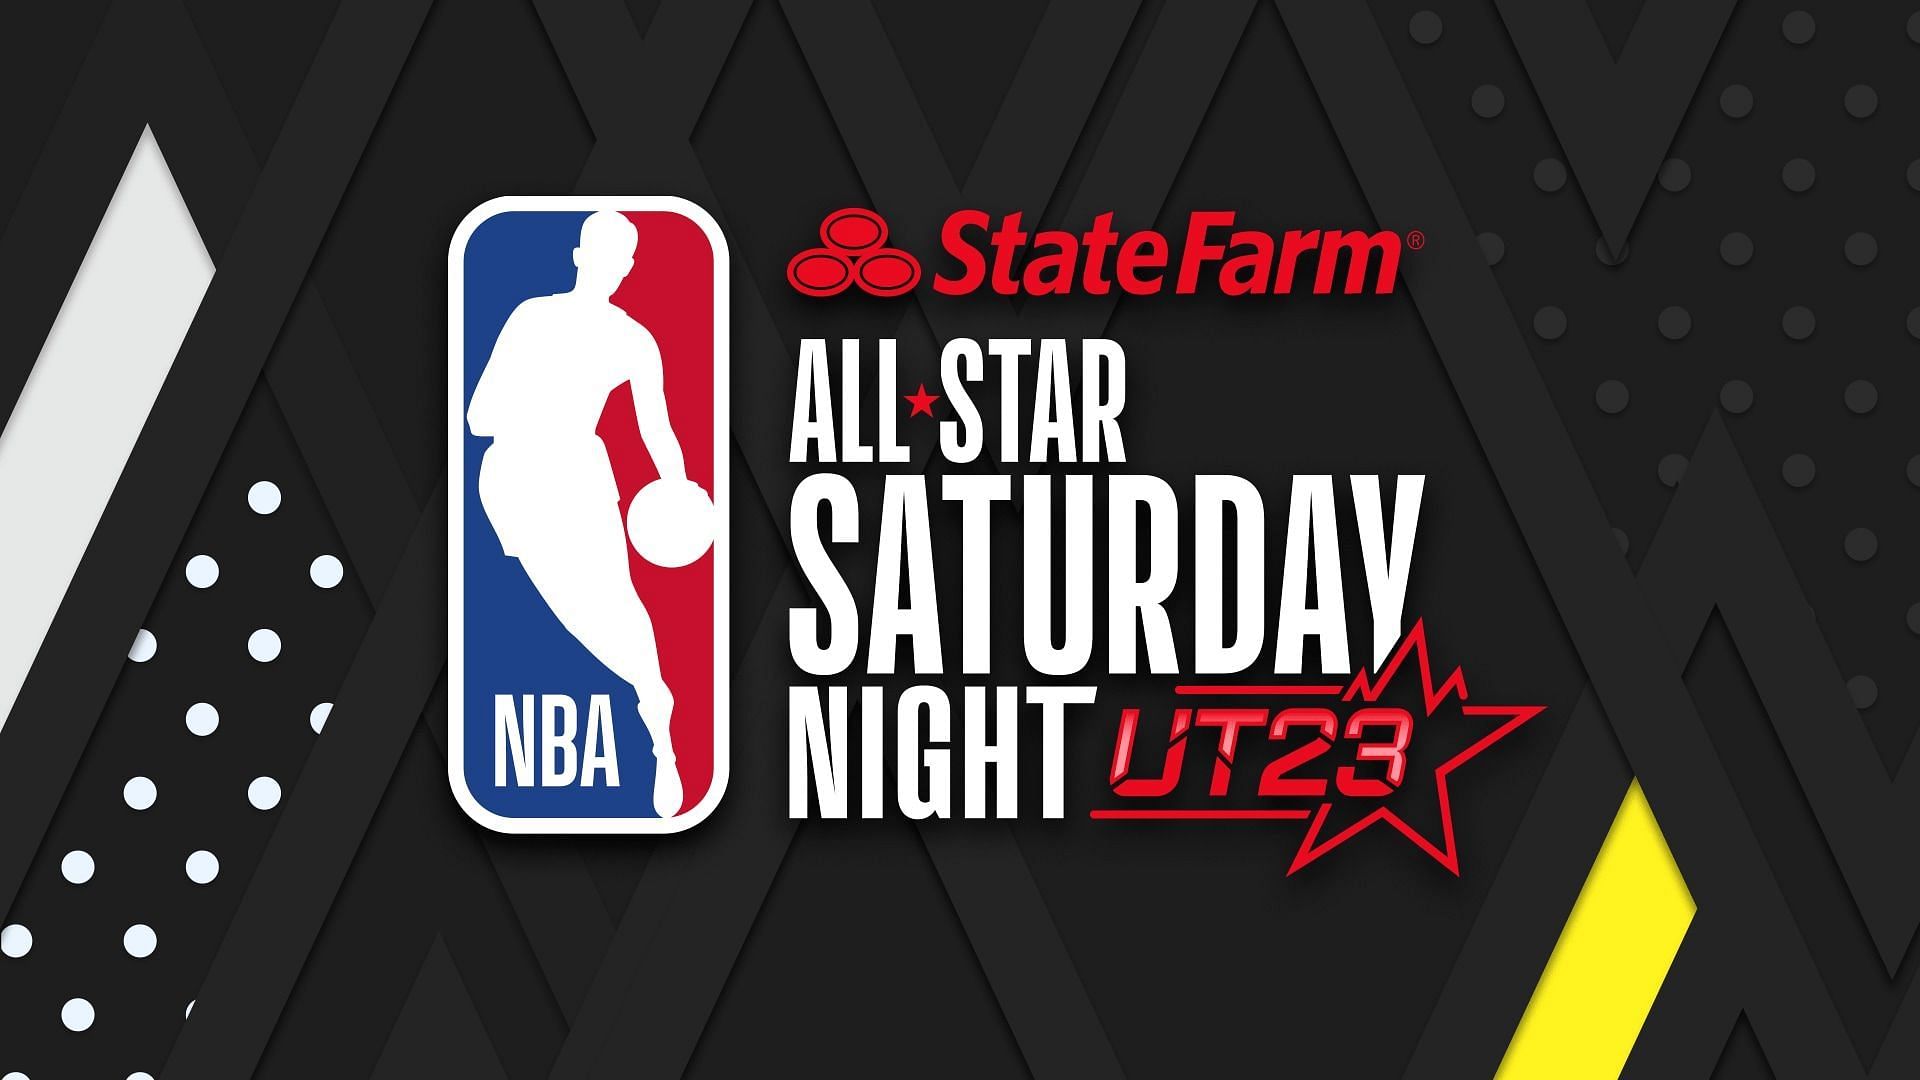 State Farm All-Star Saturday Night promo